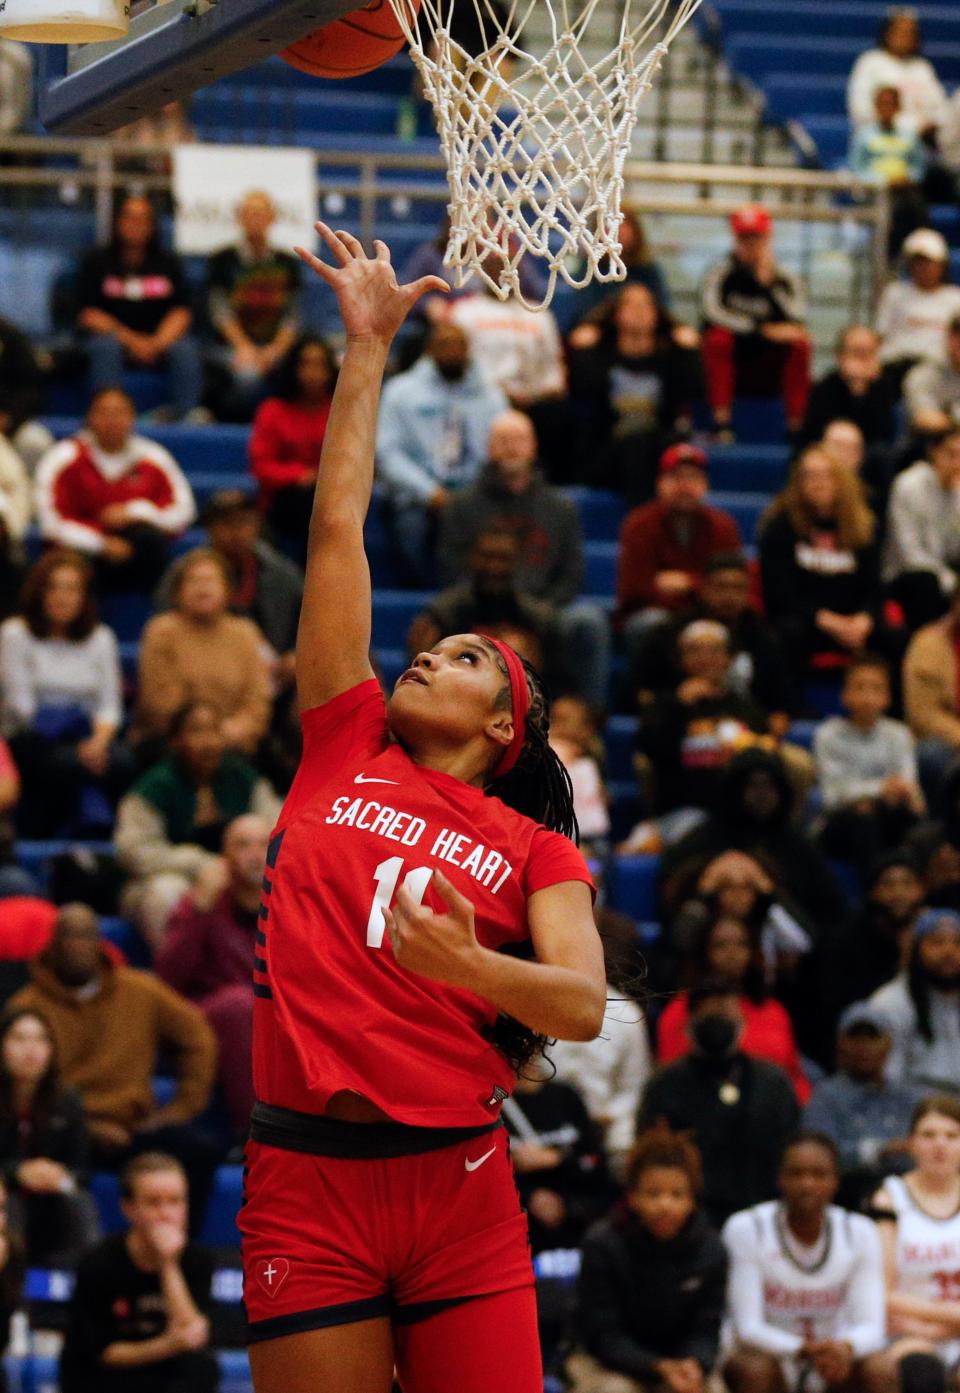 Sacred Heart’s ZaKiyah Johnson makes a basket against Manual on Saturday. Johnson scored a team-high 21 points.